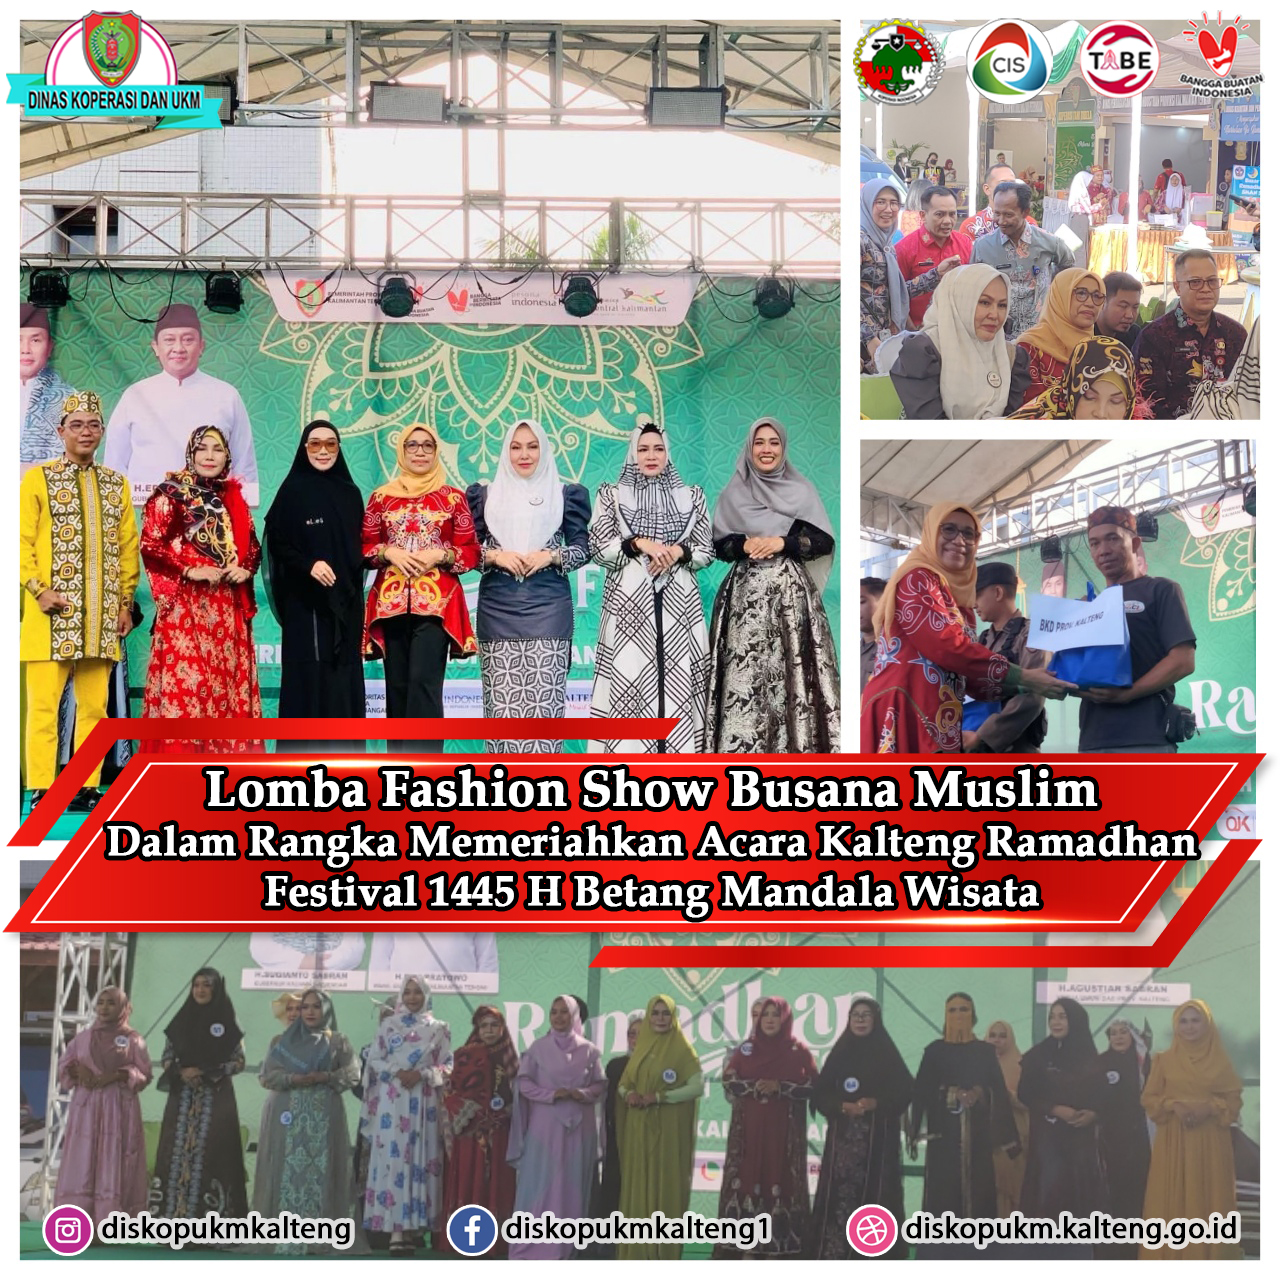 Lomba Fashion Show Busana Muslim Kalteng Ramadhan Festival 1445 H